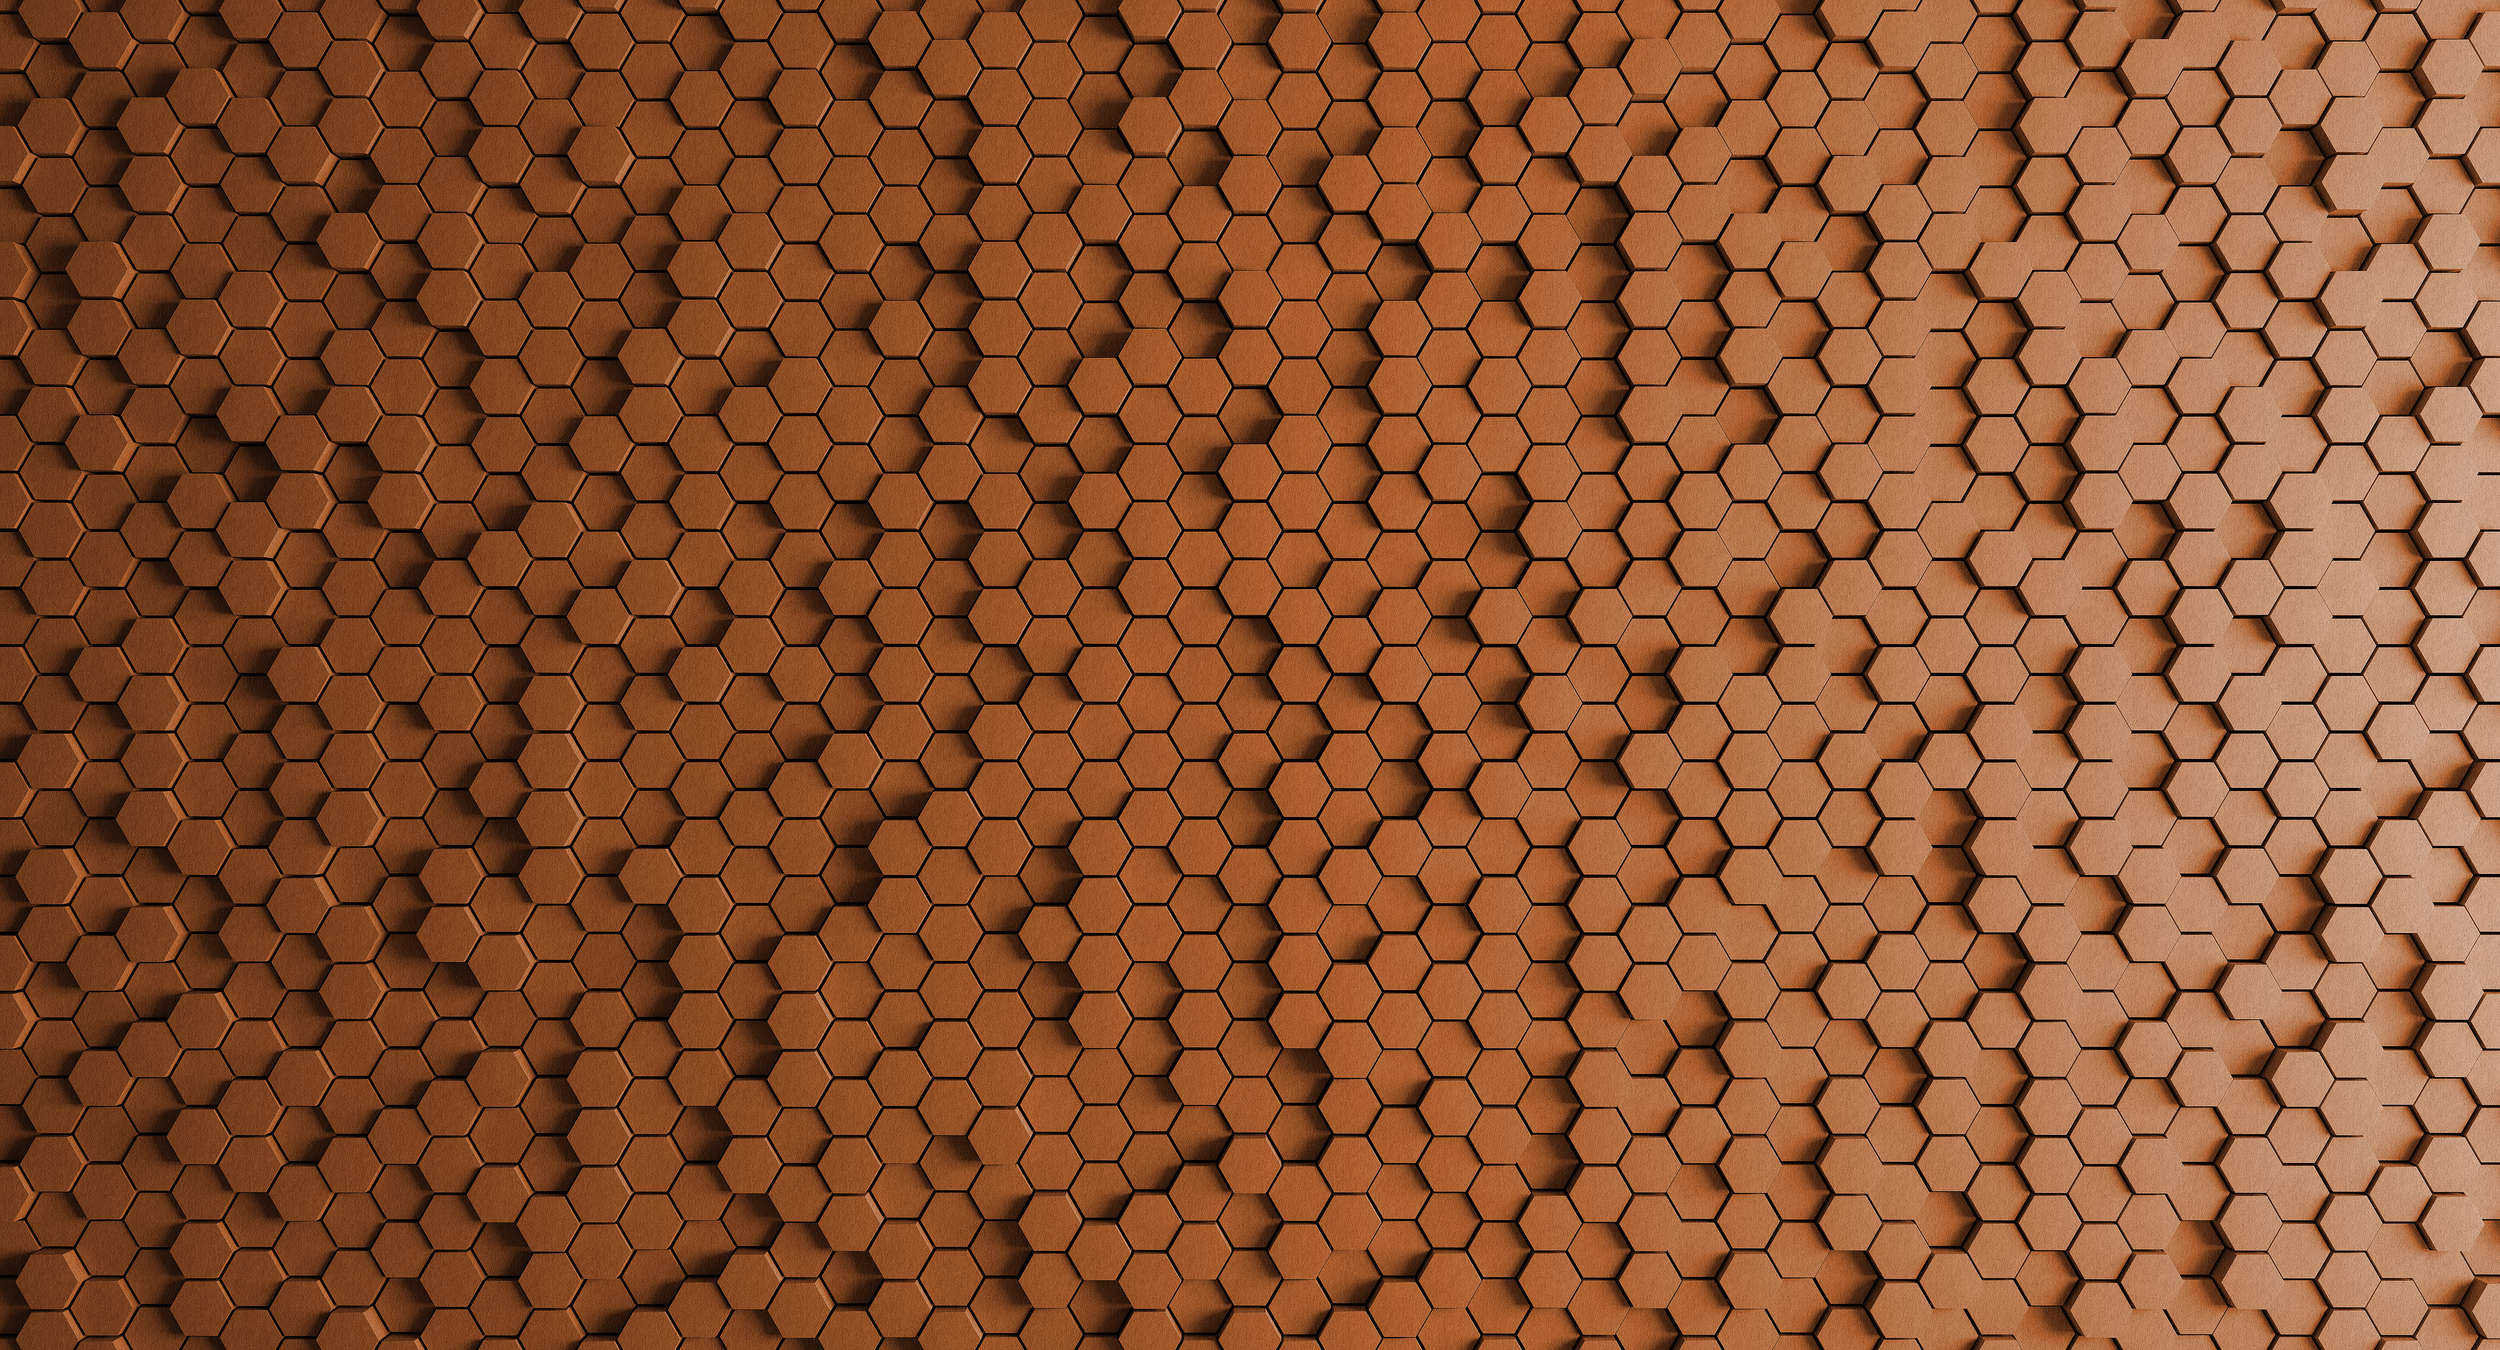             Honeycomb 2 - 3D wallpaper with orange honeycomb design - structure felt - copper, orange | structure non-woven
        